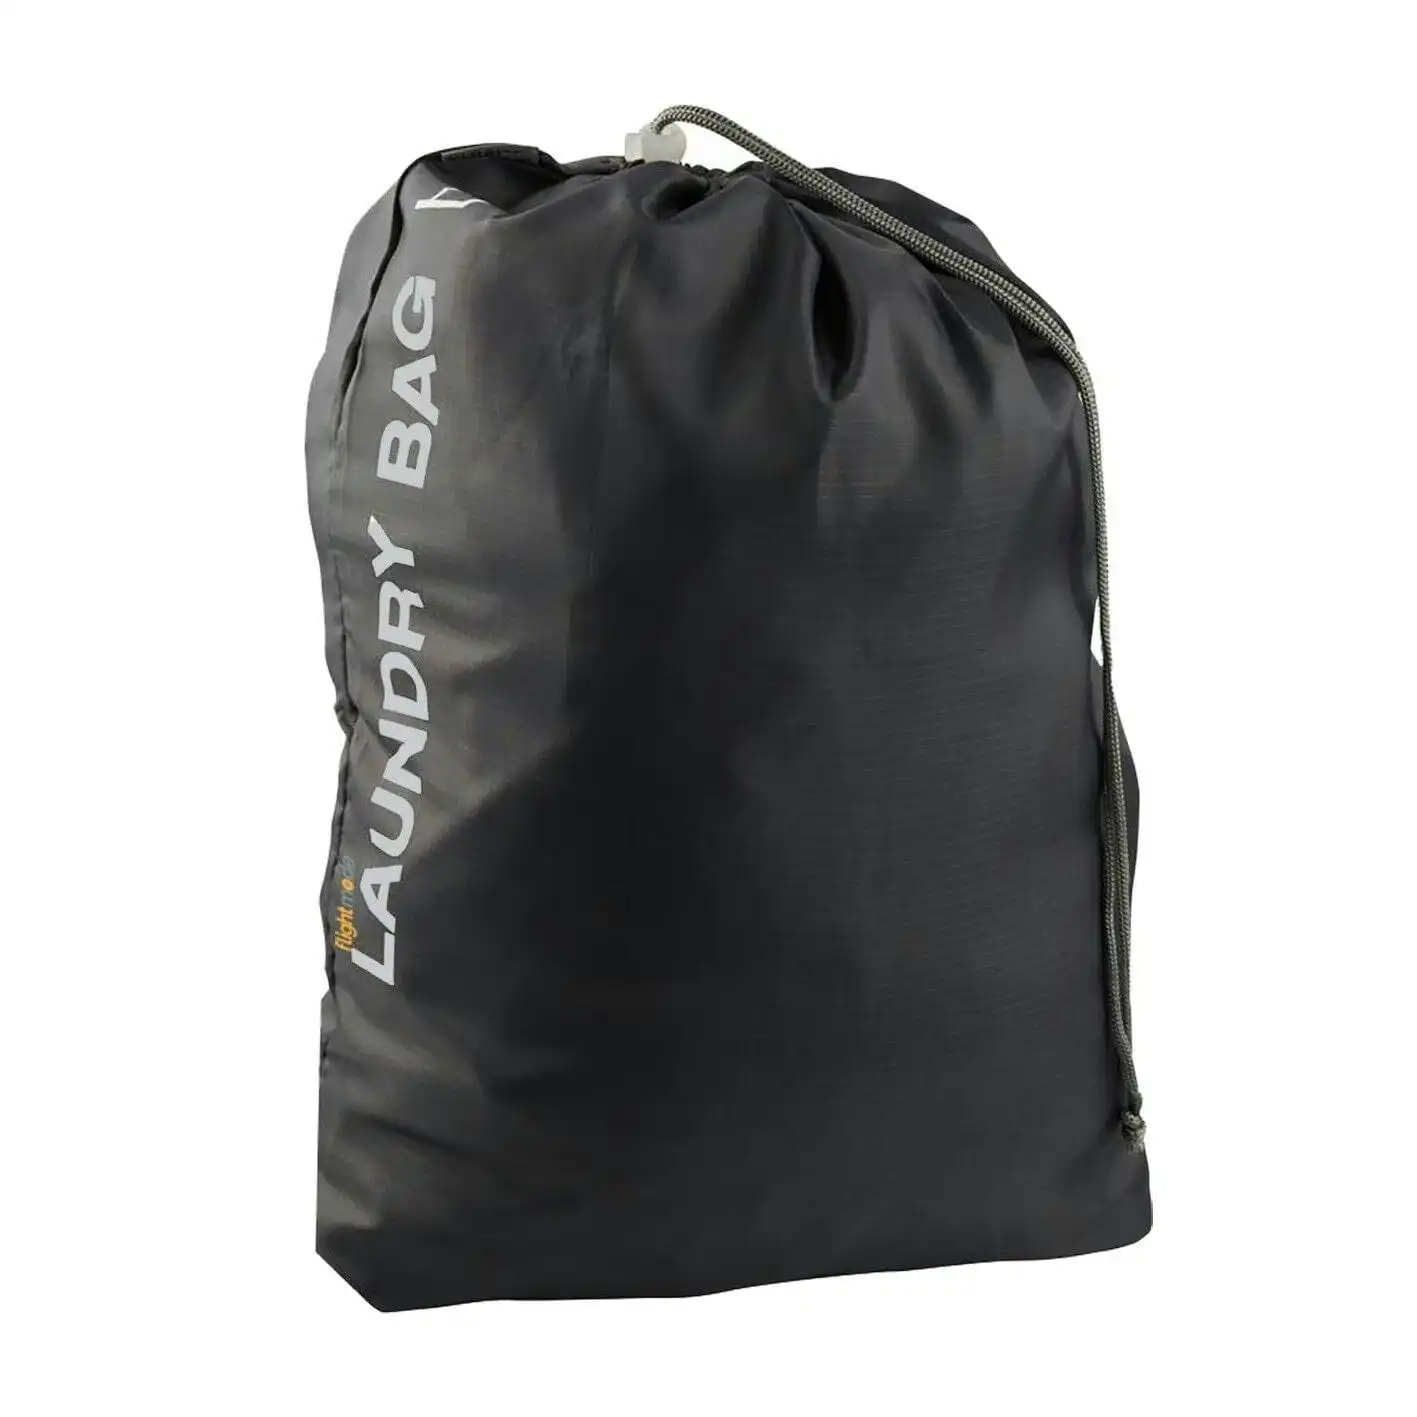 8PK Travel Laundry Bag Drawstring Water Resistant Sports Gym Clothes Organiser